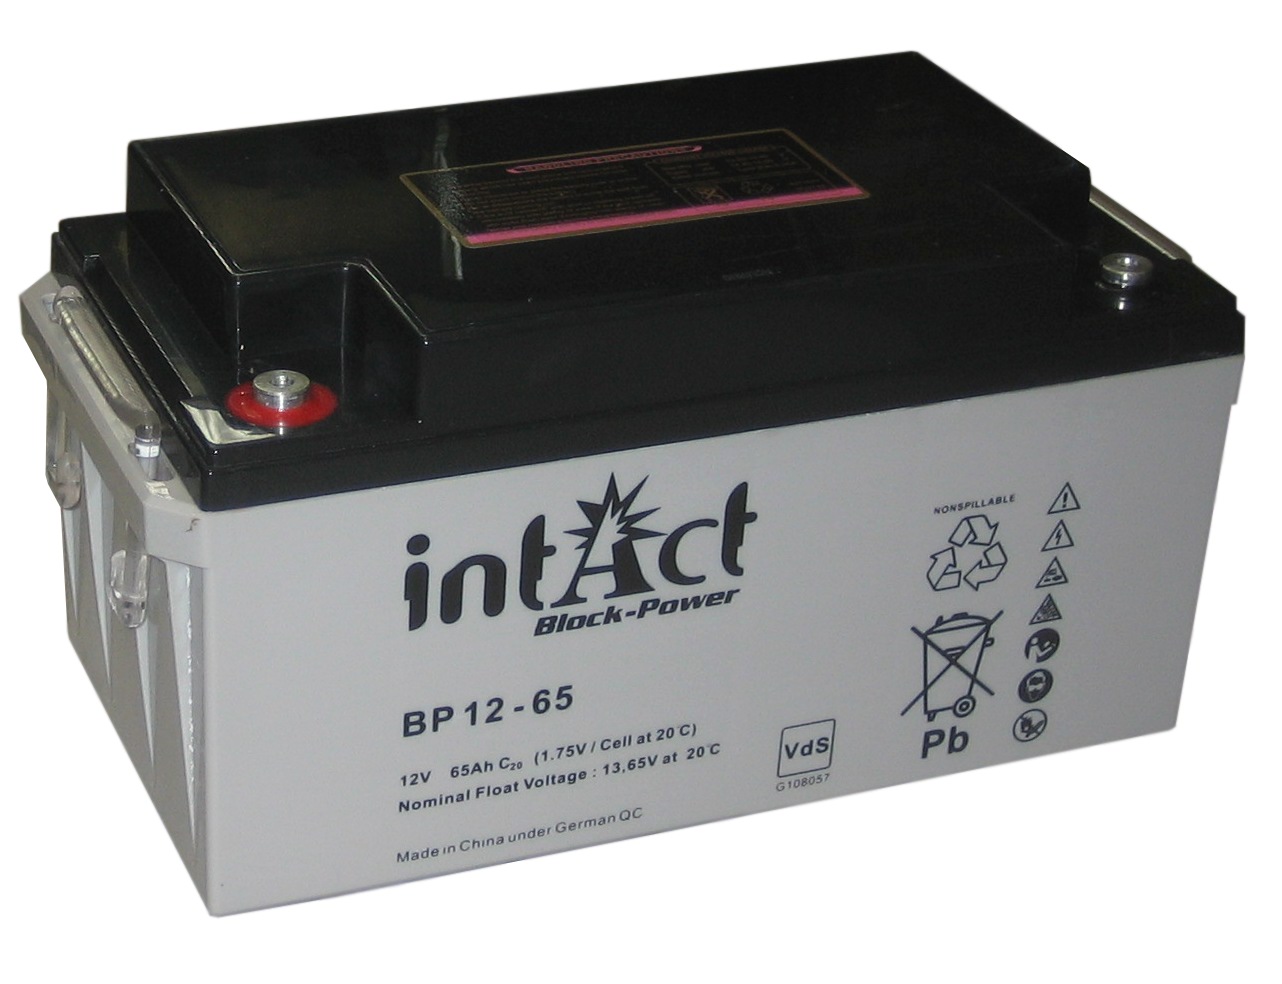 Intact Block-Power 12 V 65Ah (c20) 348x167x178 1/F-M6